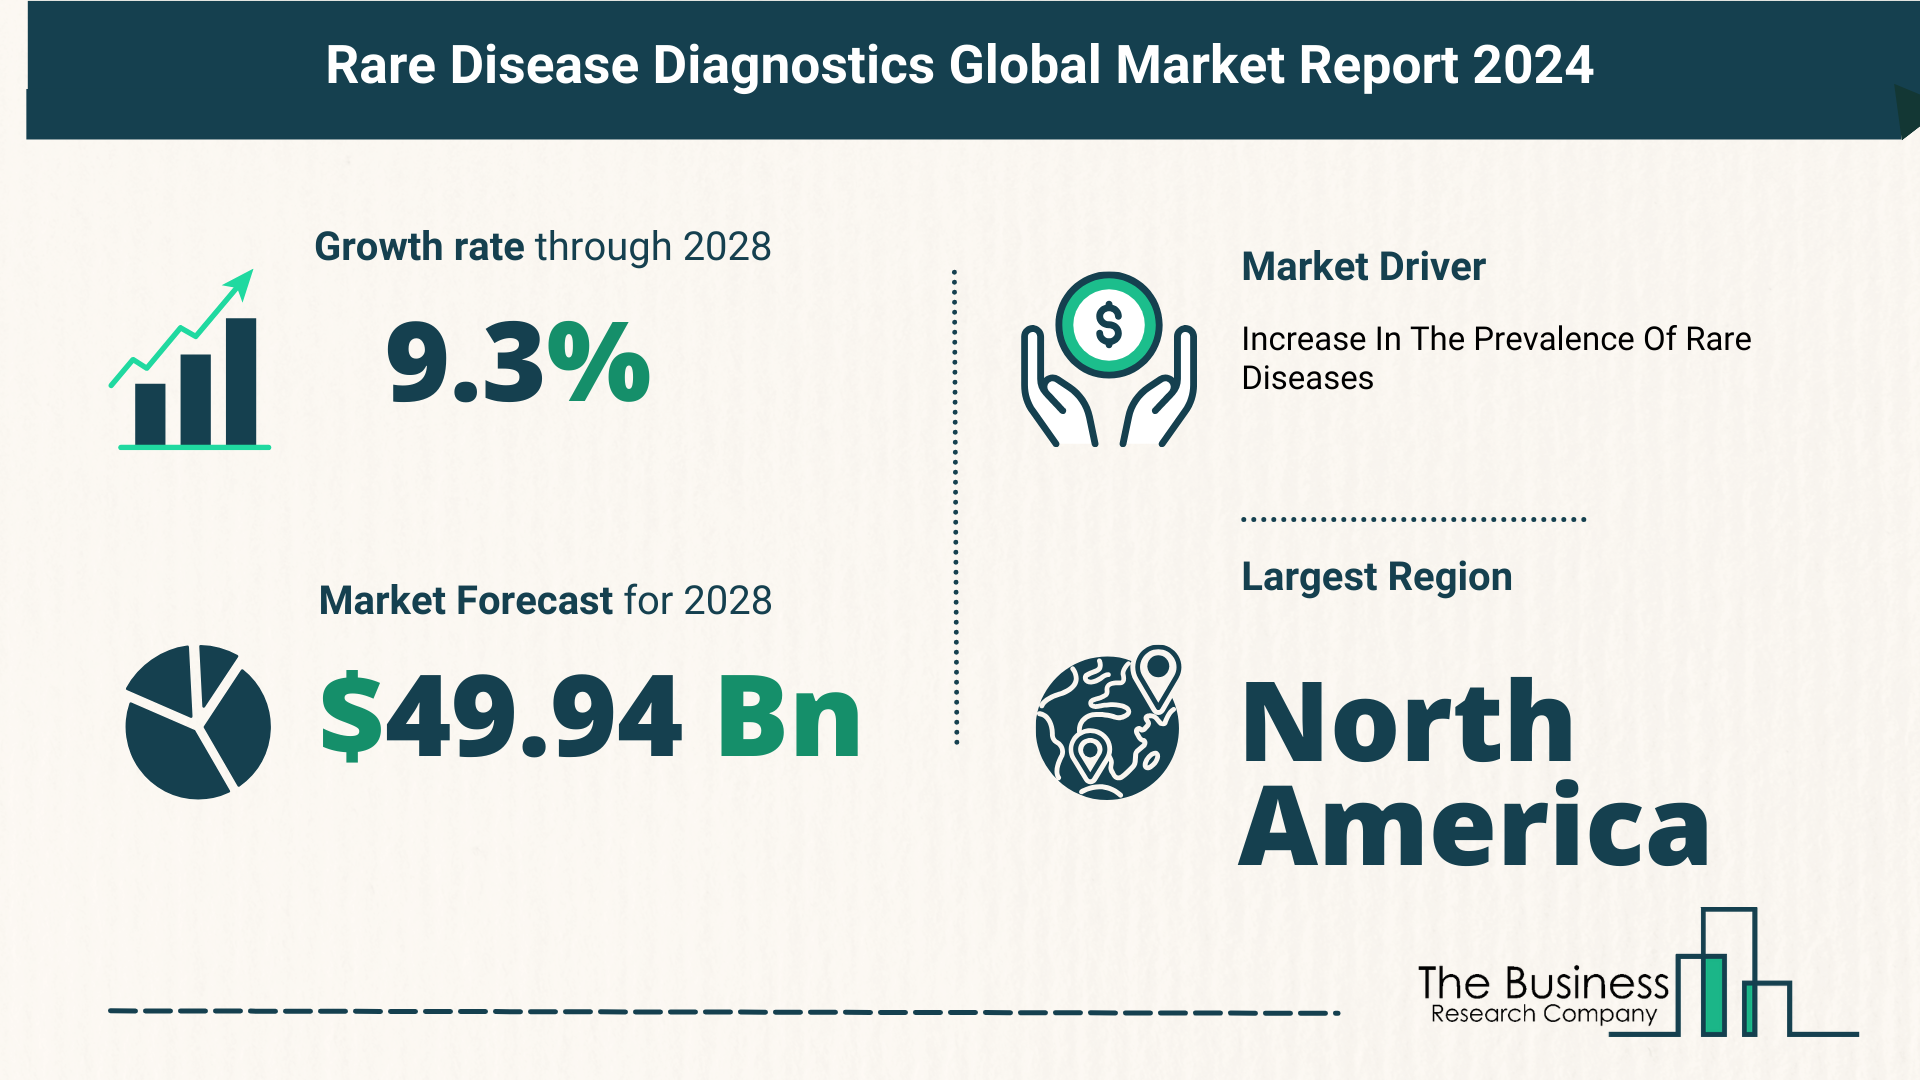 Global Rare Disease Diagnostics Market